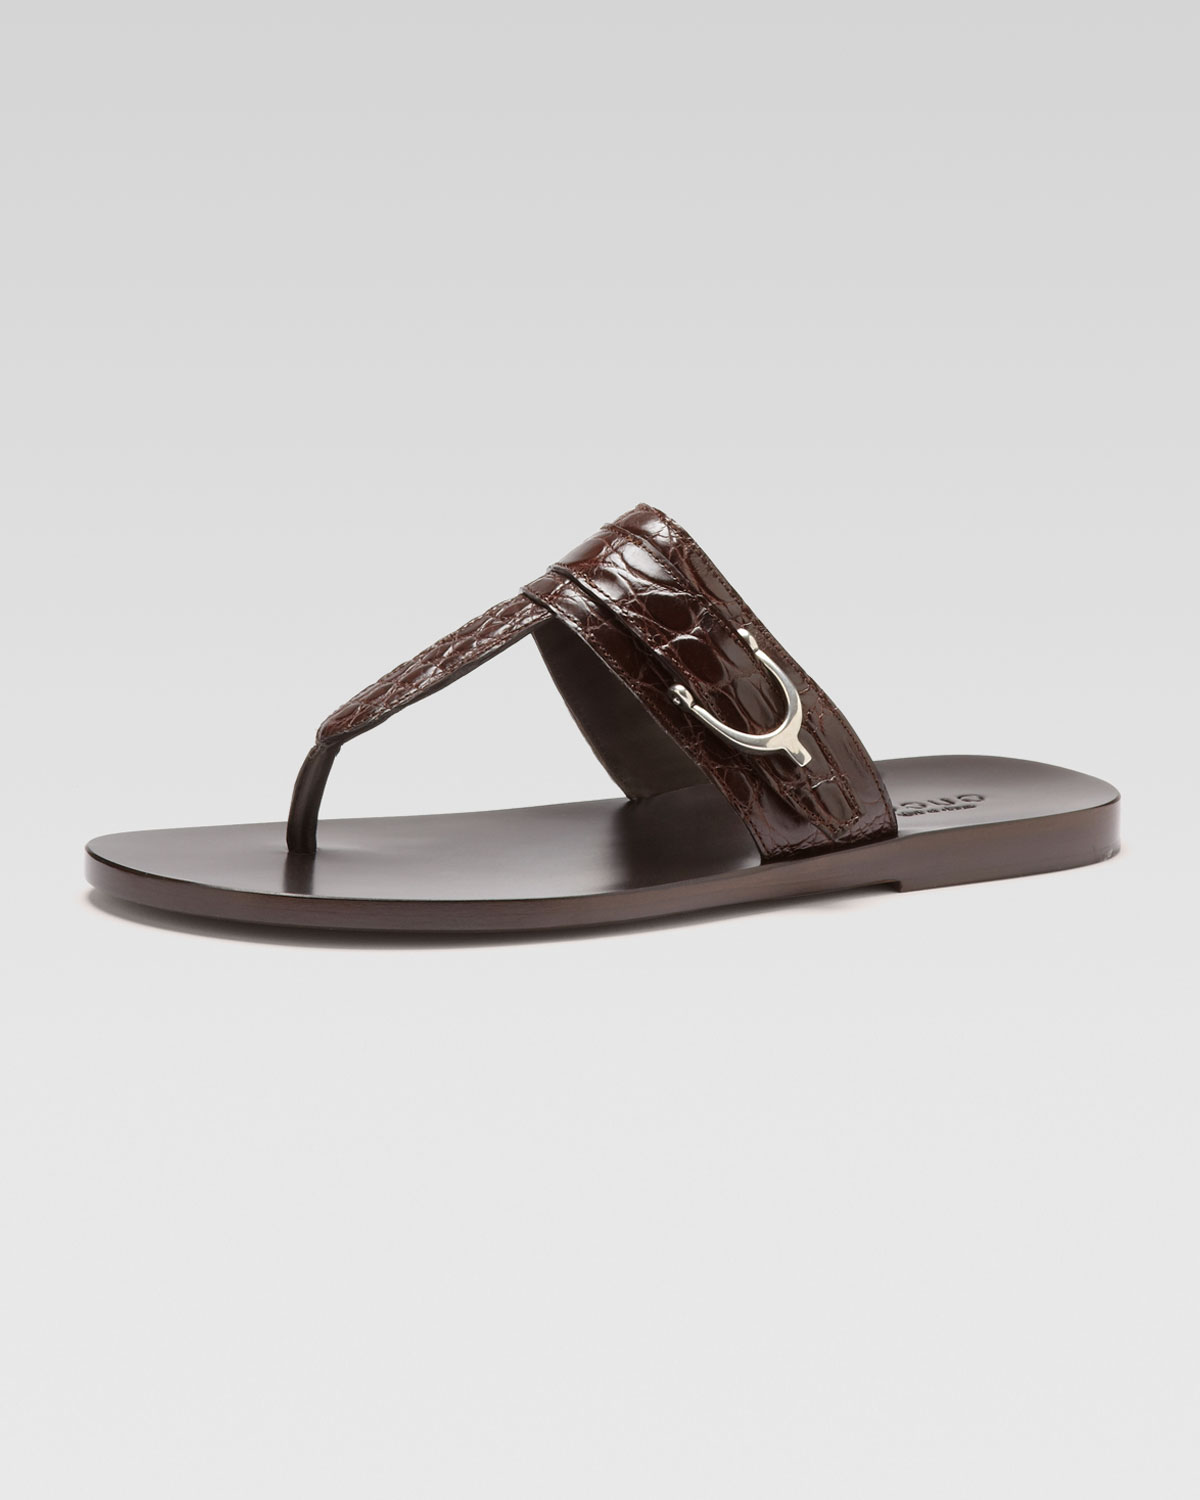 Lyst Gucci  Karel Crocodile  Thong Sandal  in Brown for Men 